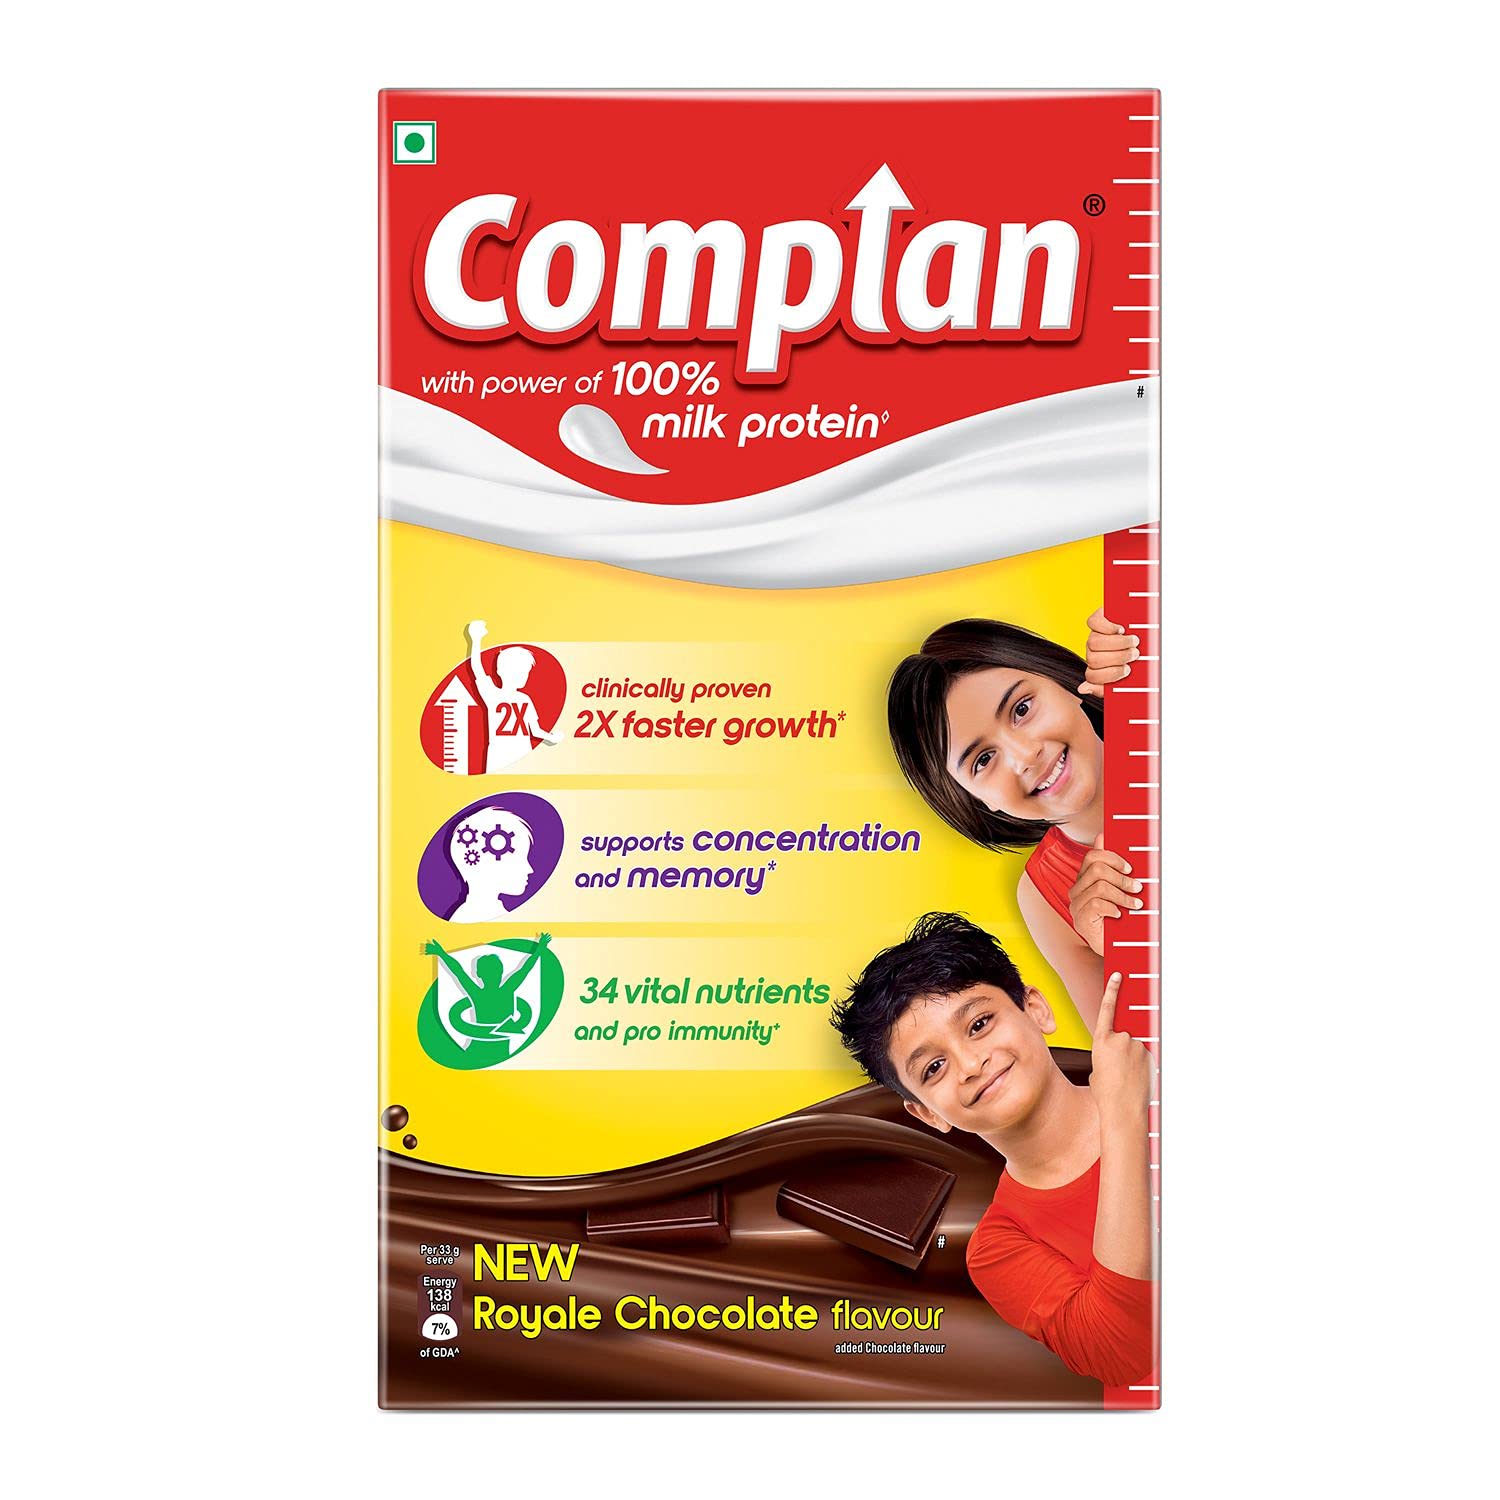 Complan Royale Chocolate, 1kg (Carton)